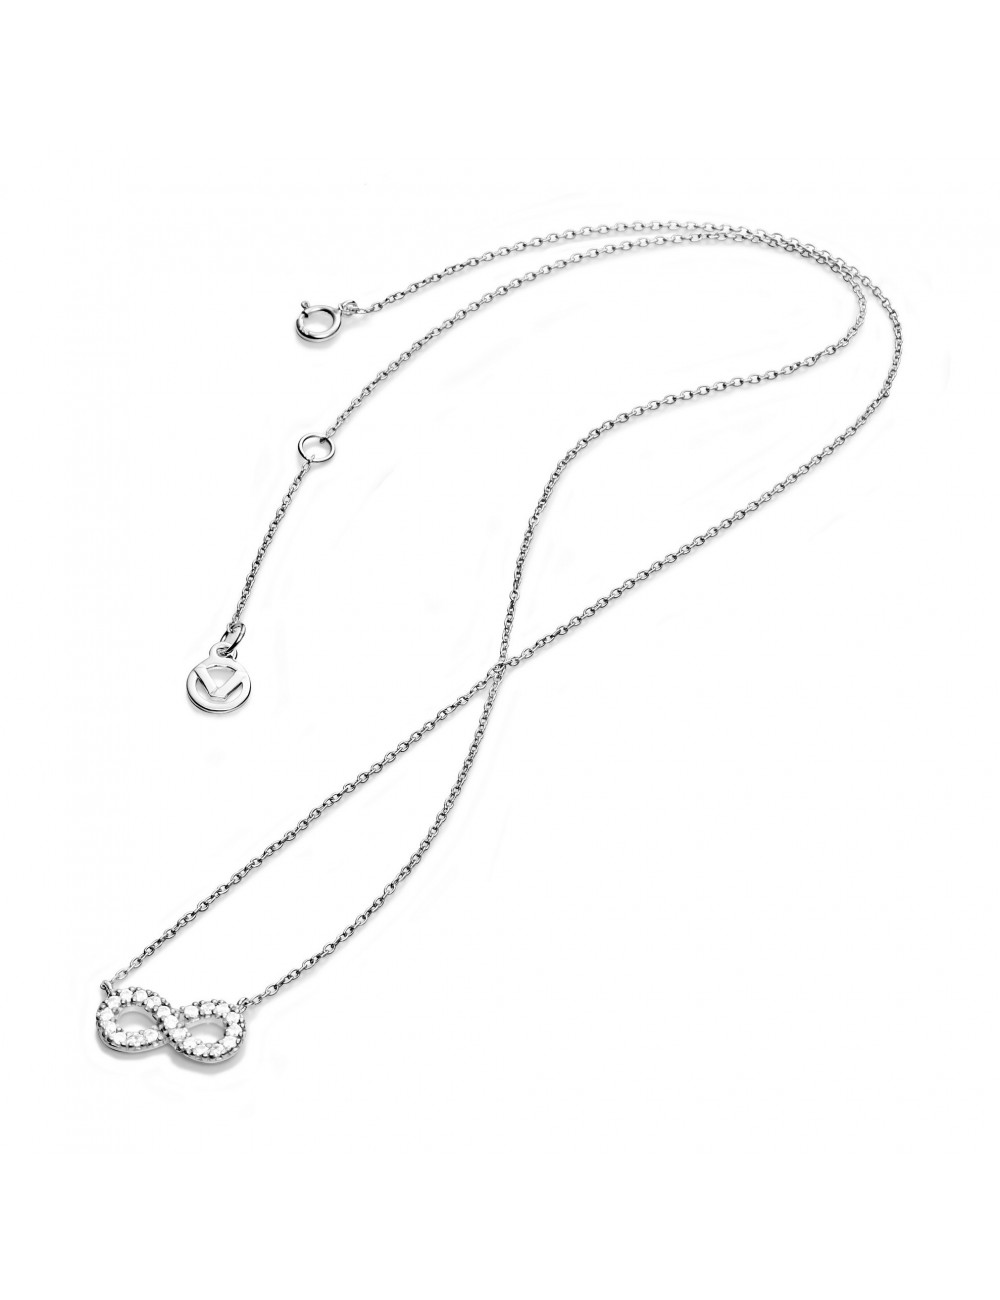 gargantilla-viceroy-jewels-colgante-infinito-circonitas-plata-5017c000-30